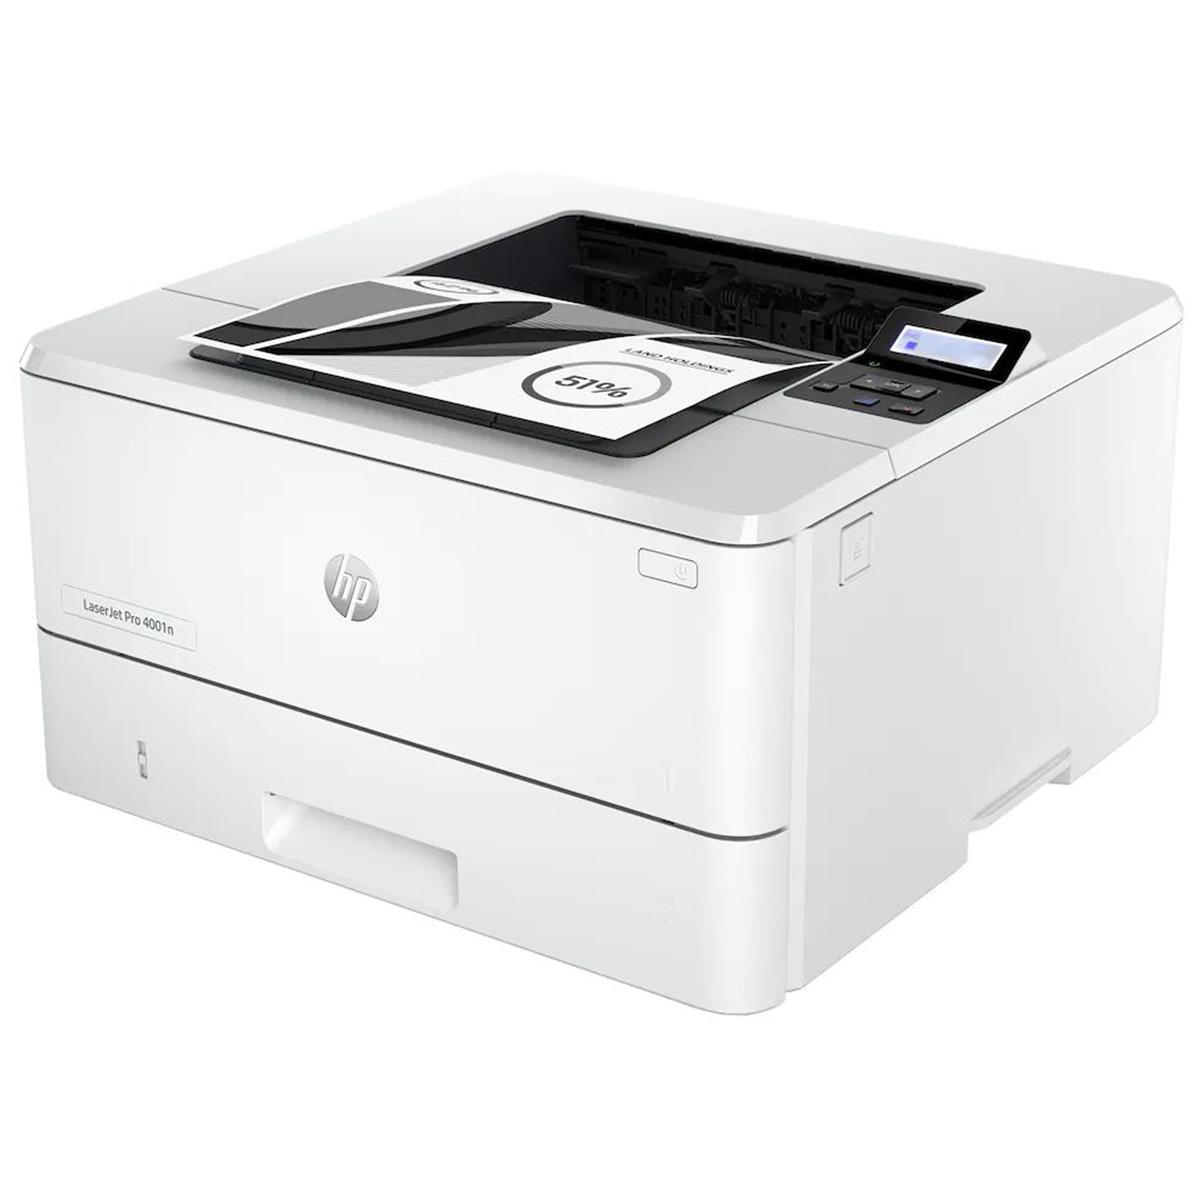 Image of HP LaserJet Pro 4001n Monochrome Laser Printer with 2-Months Instant Ink